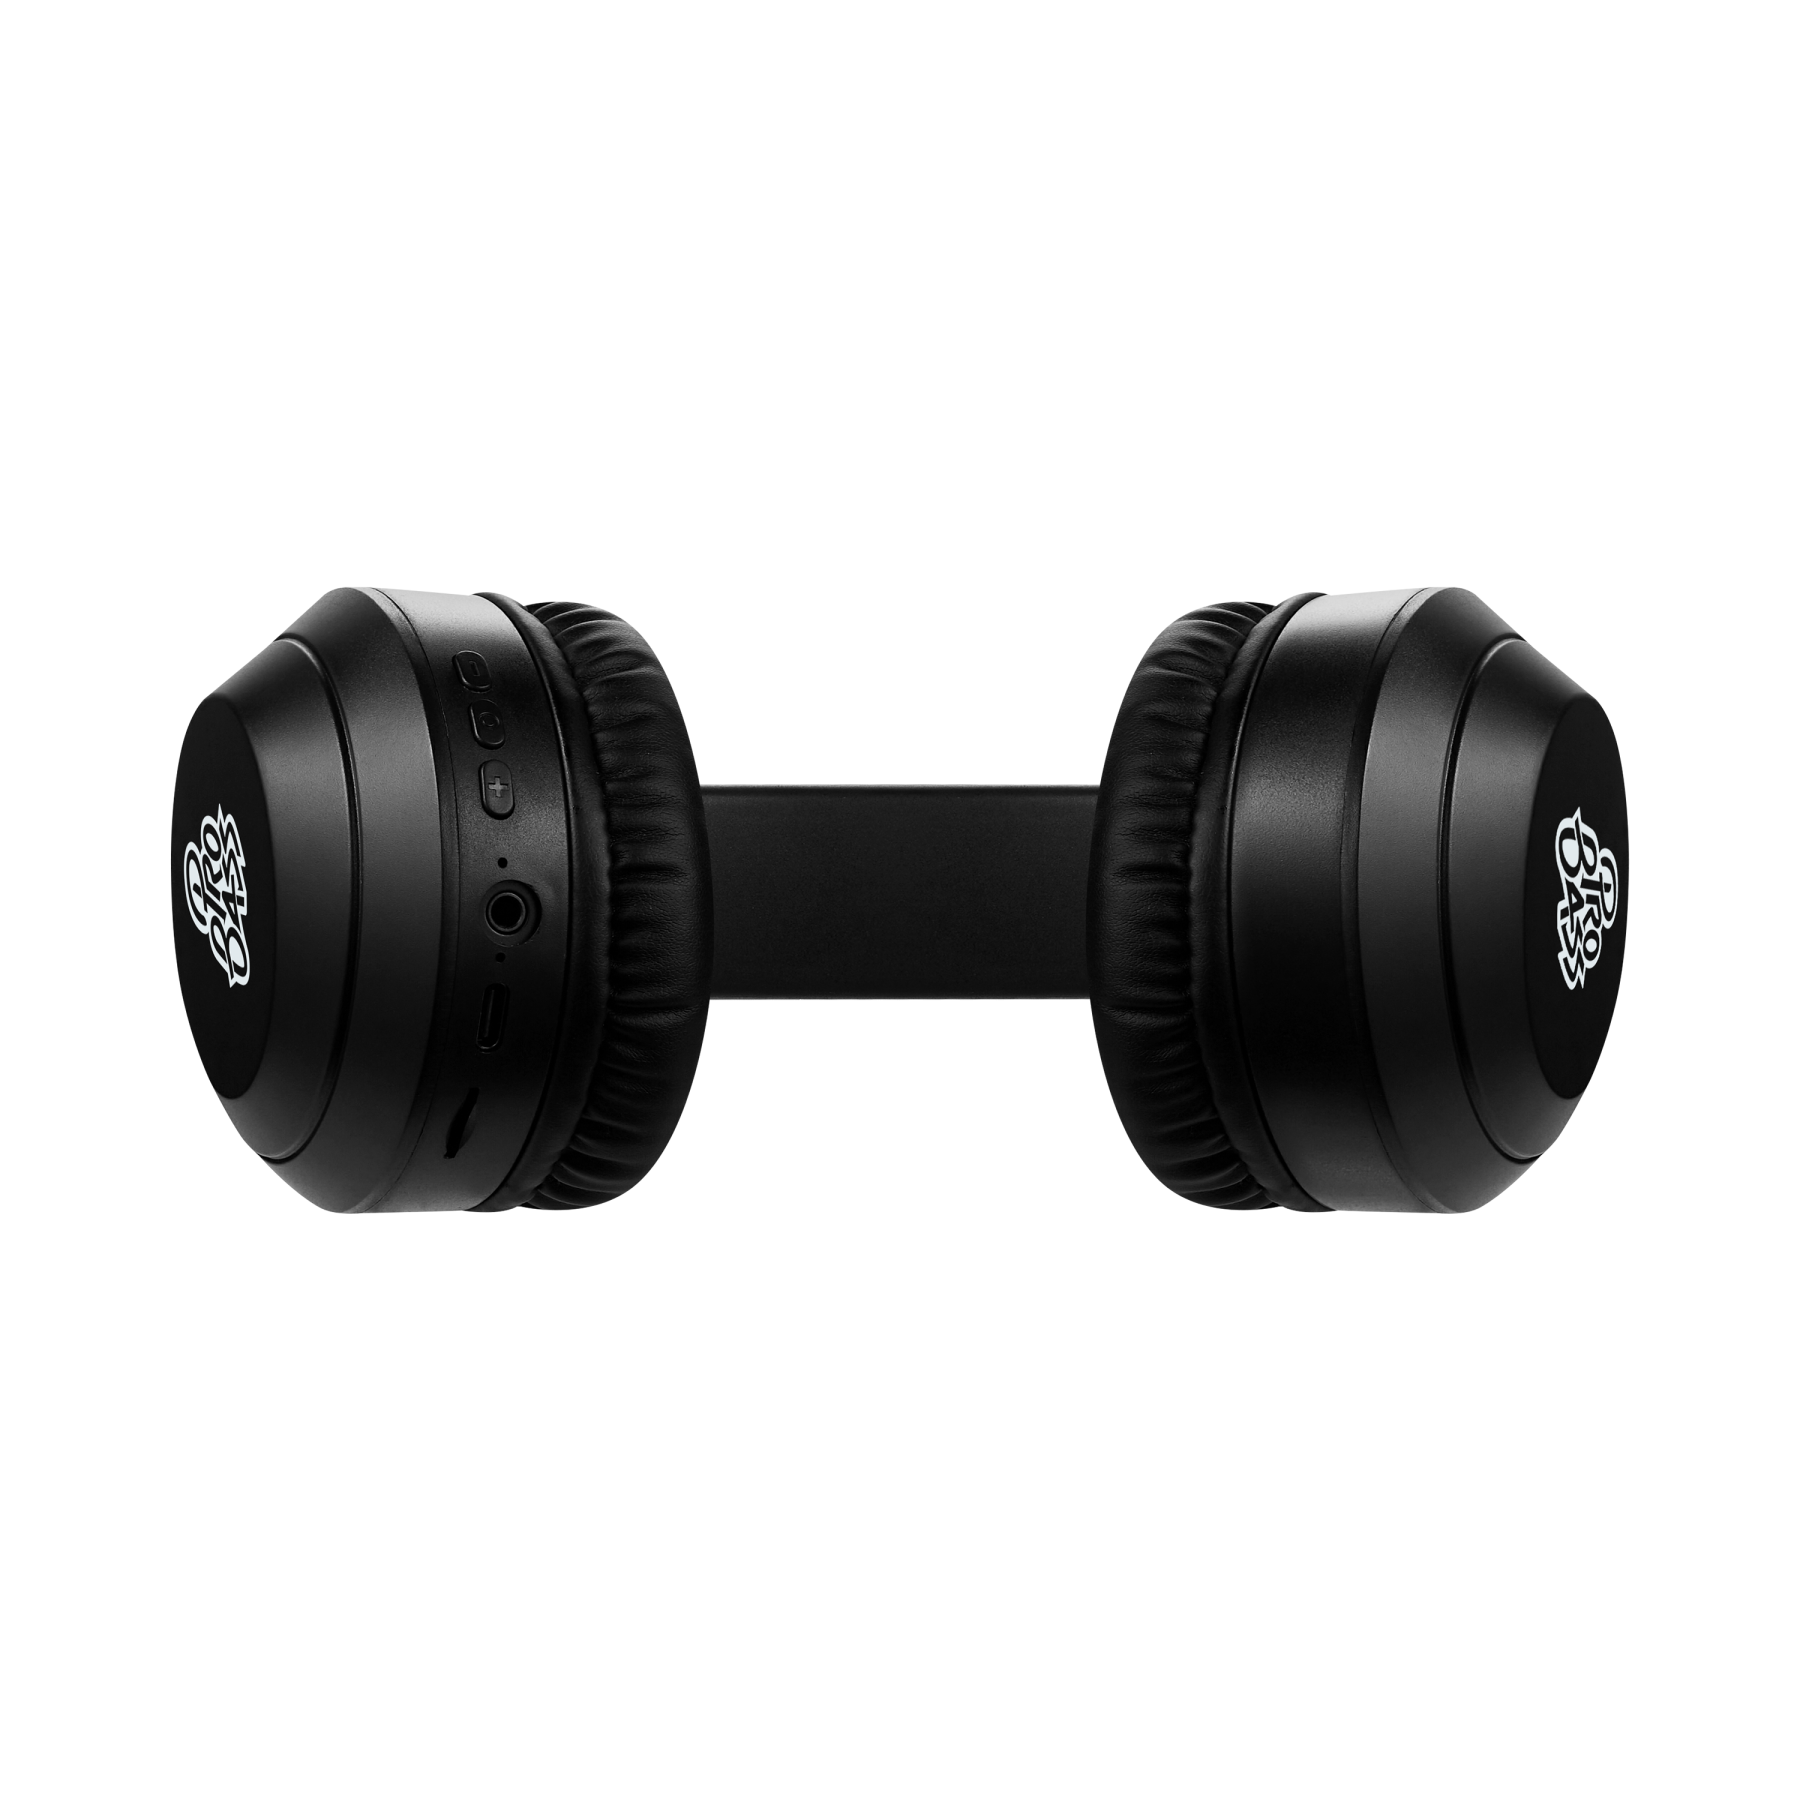 Pro Bass Renegade Series Bluetooth Headphone  - Black